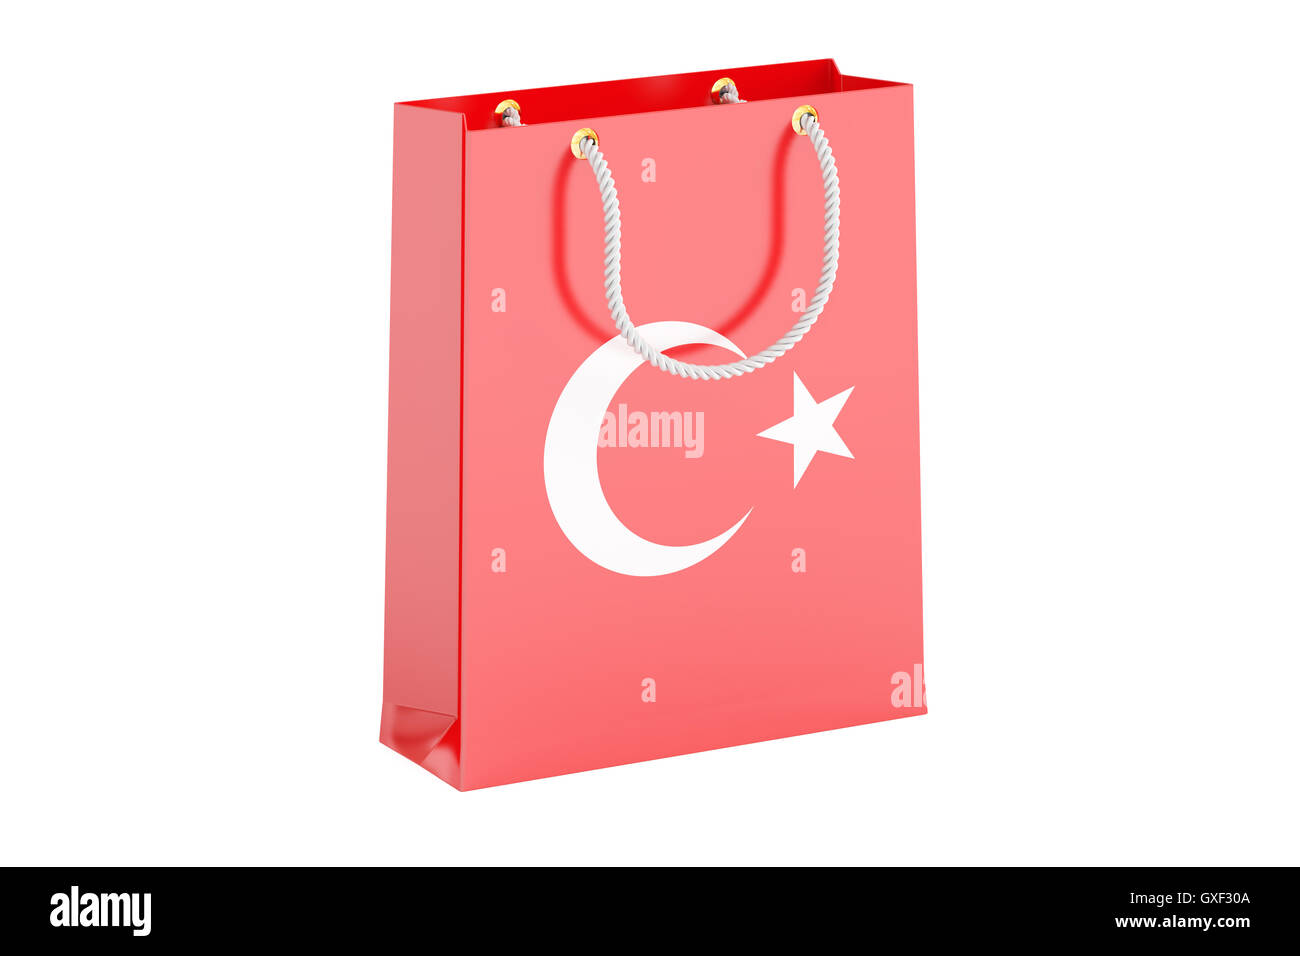 Any Bag is £10 #shopping #shoppingvlogs #turkishshop #bags #designer #